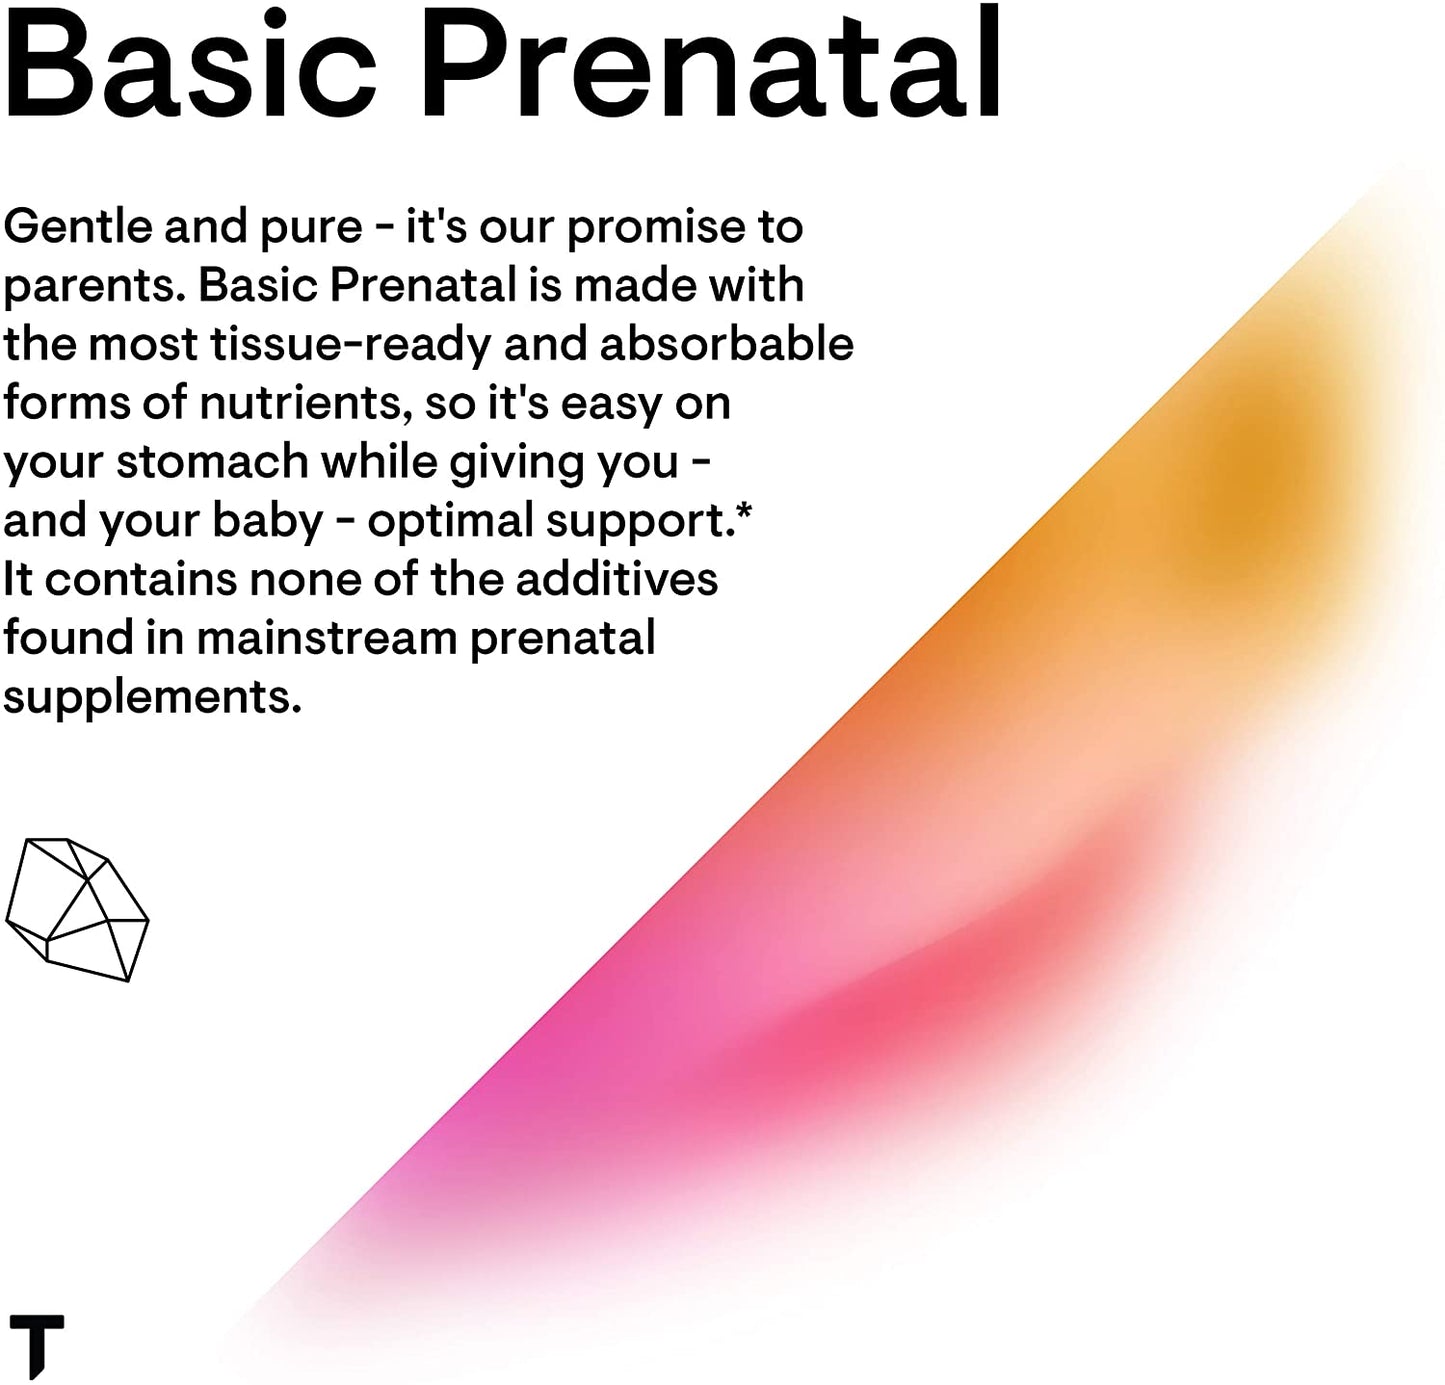 Basic Prenatal